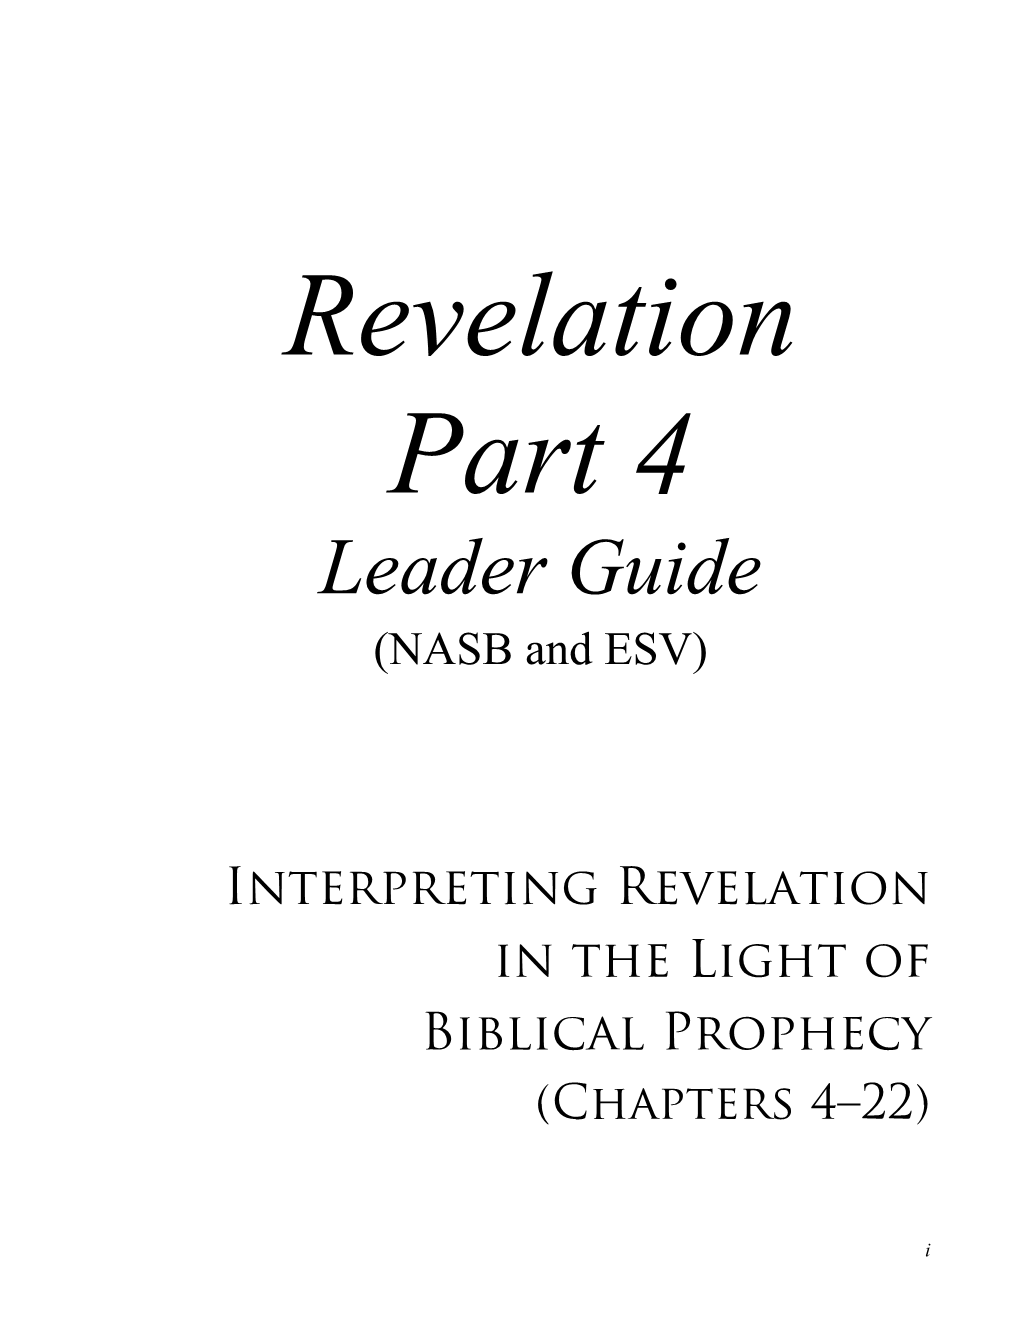 Revelation Part 4 Leader Guide (NASB and ESV)